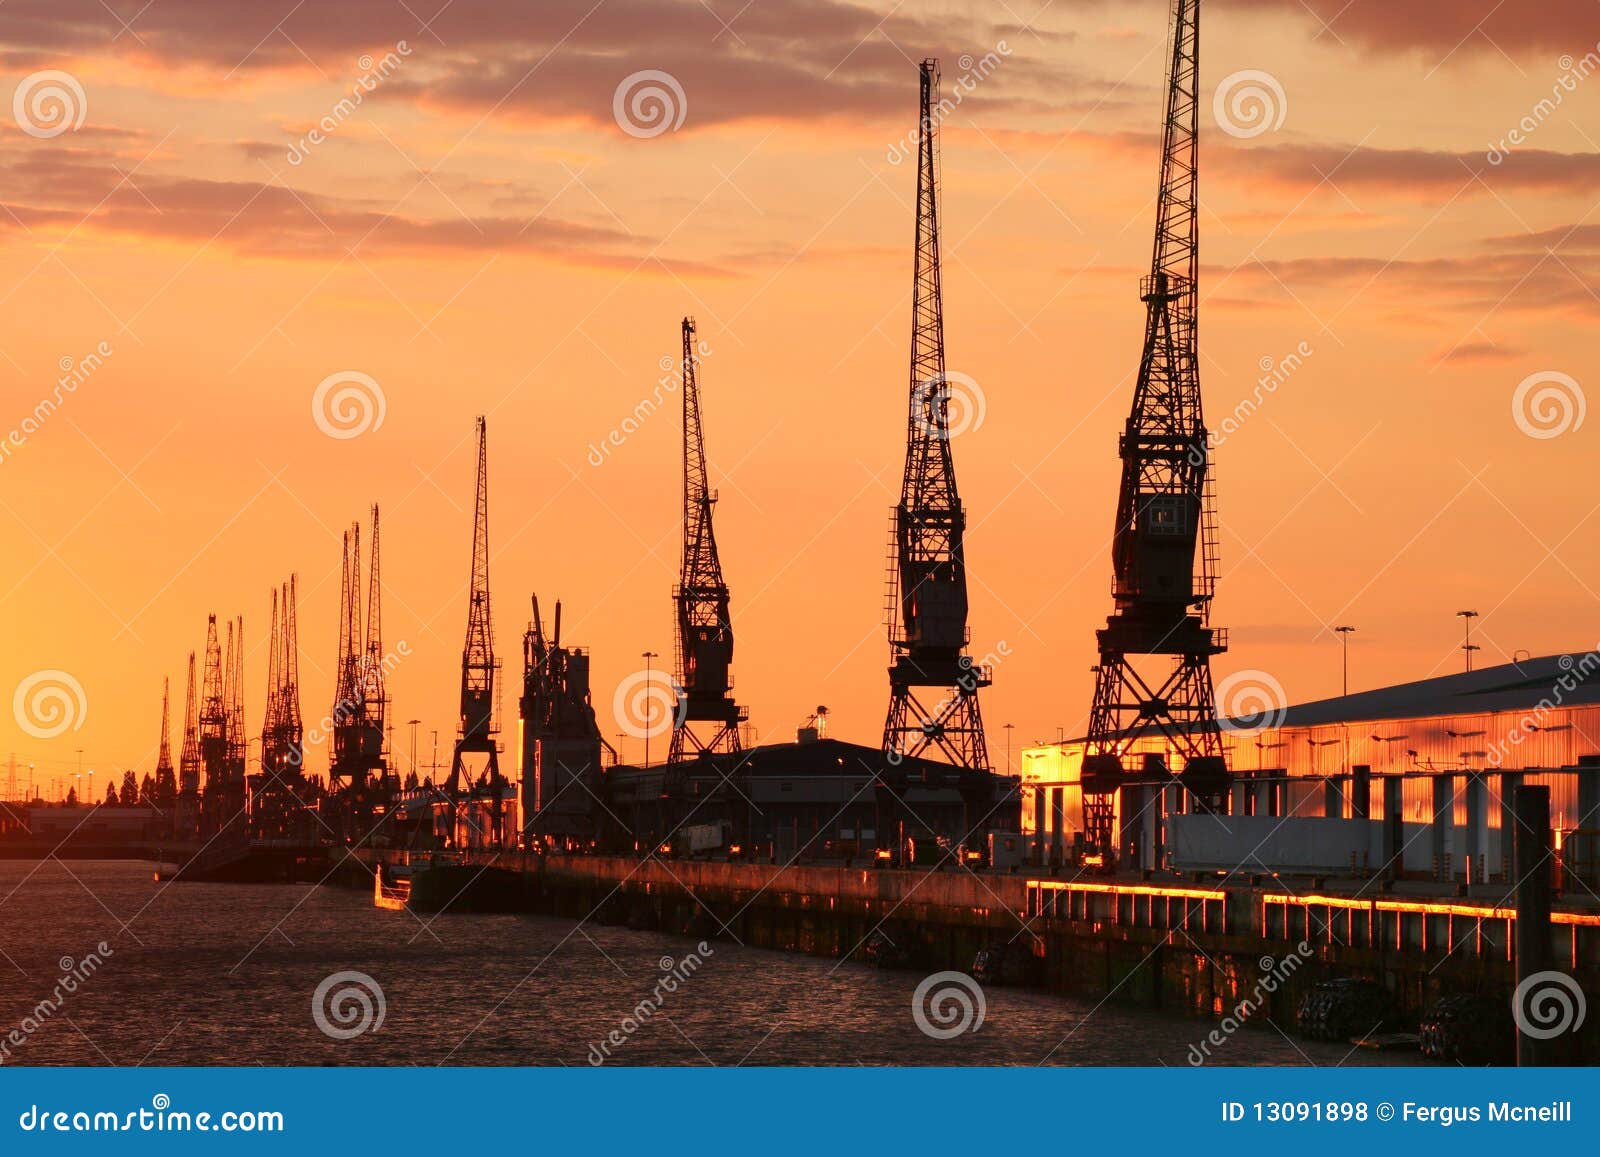 southampton docks at sunset